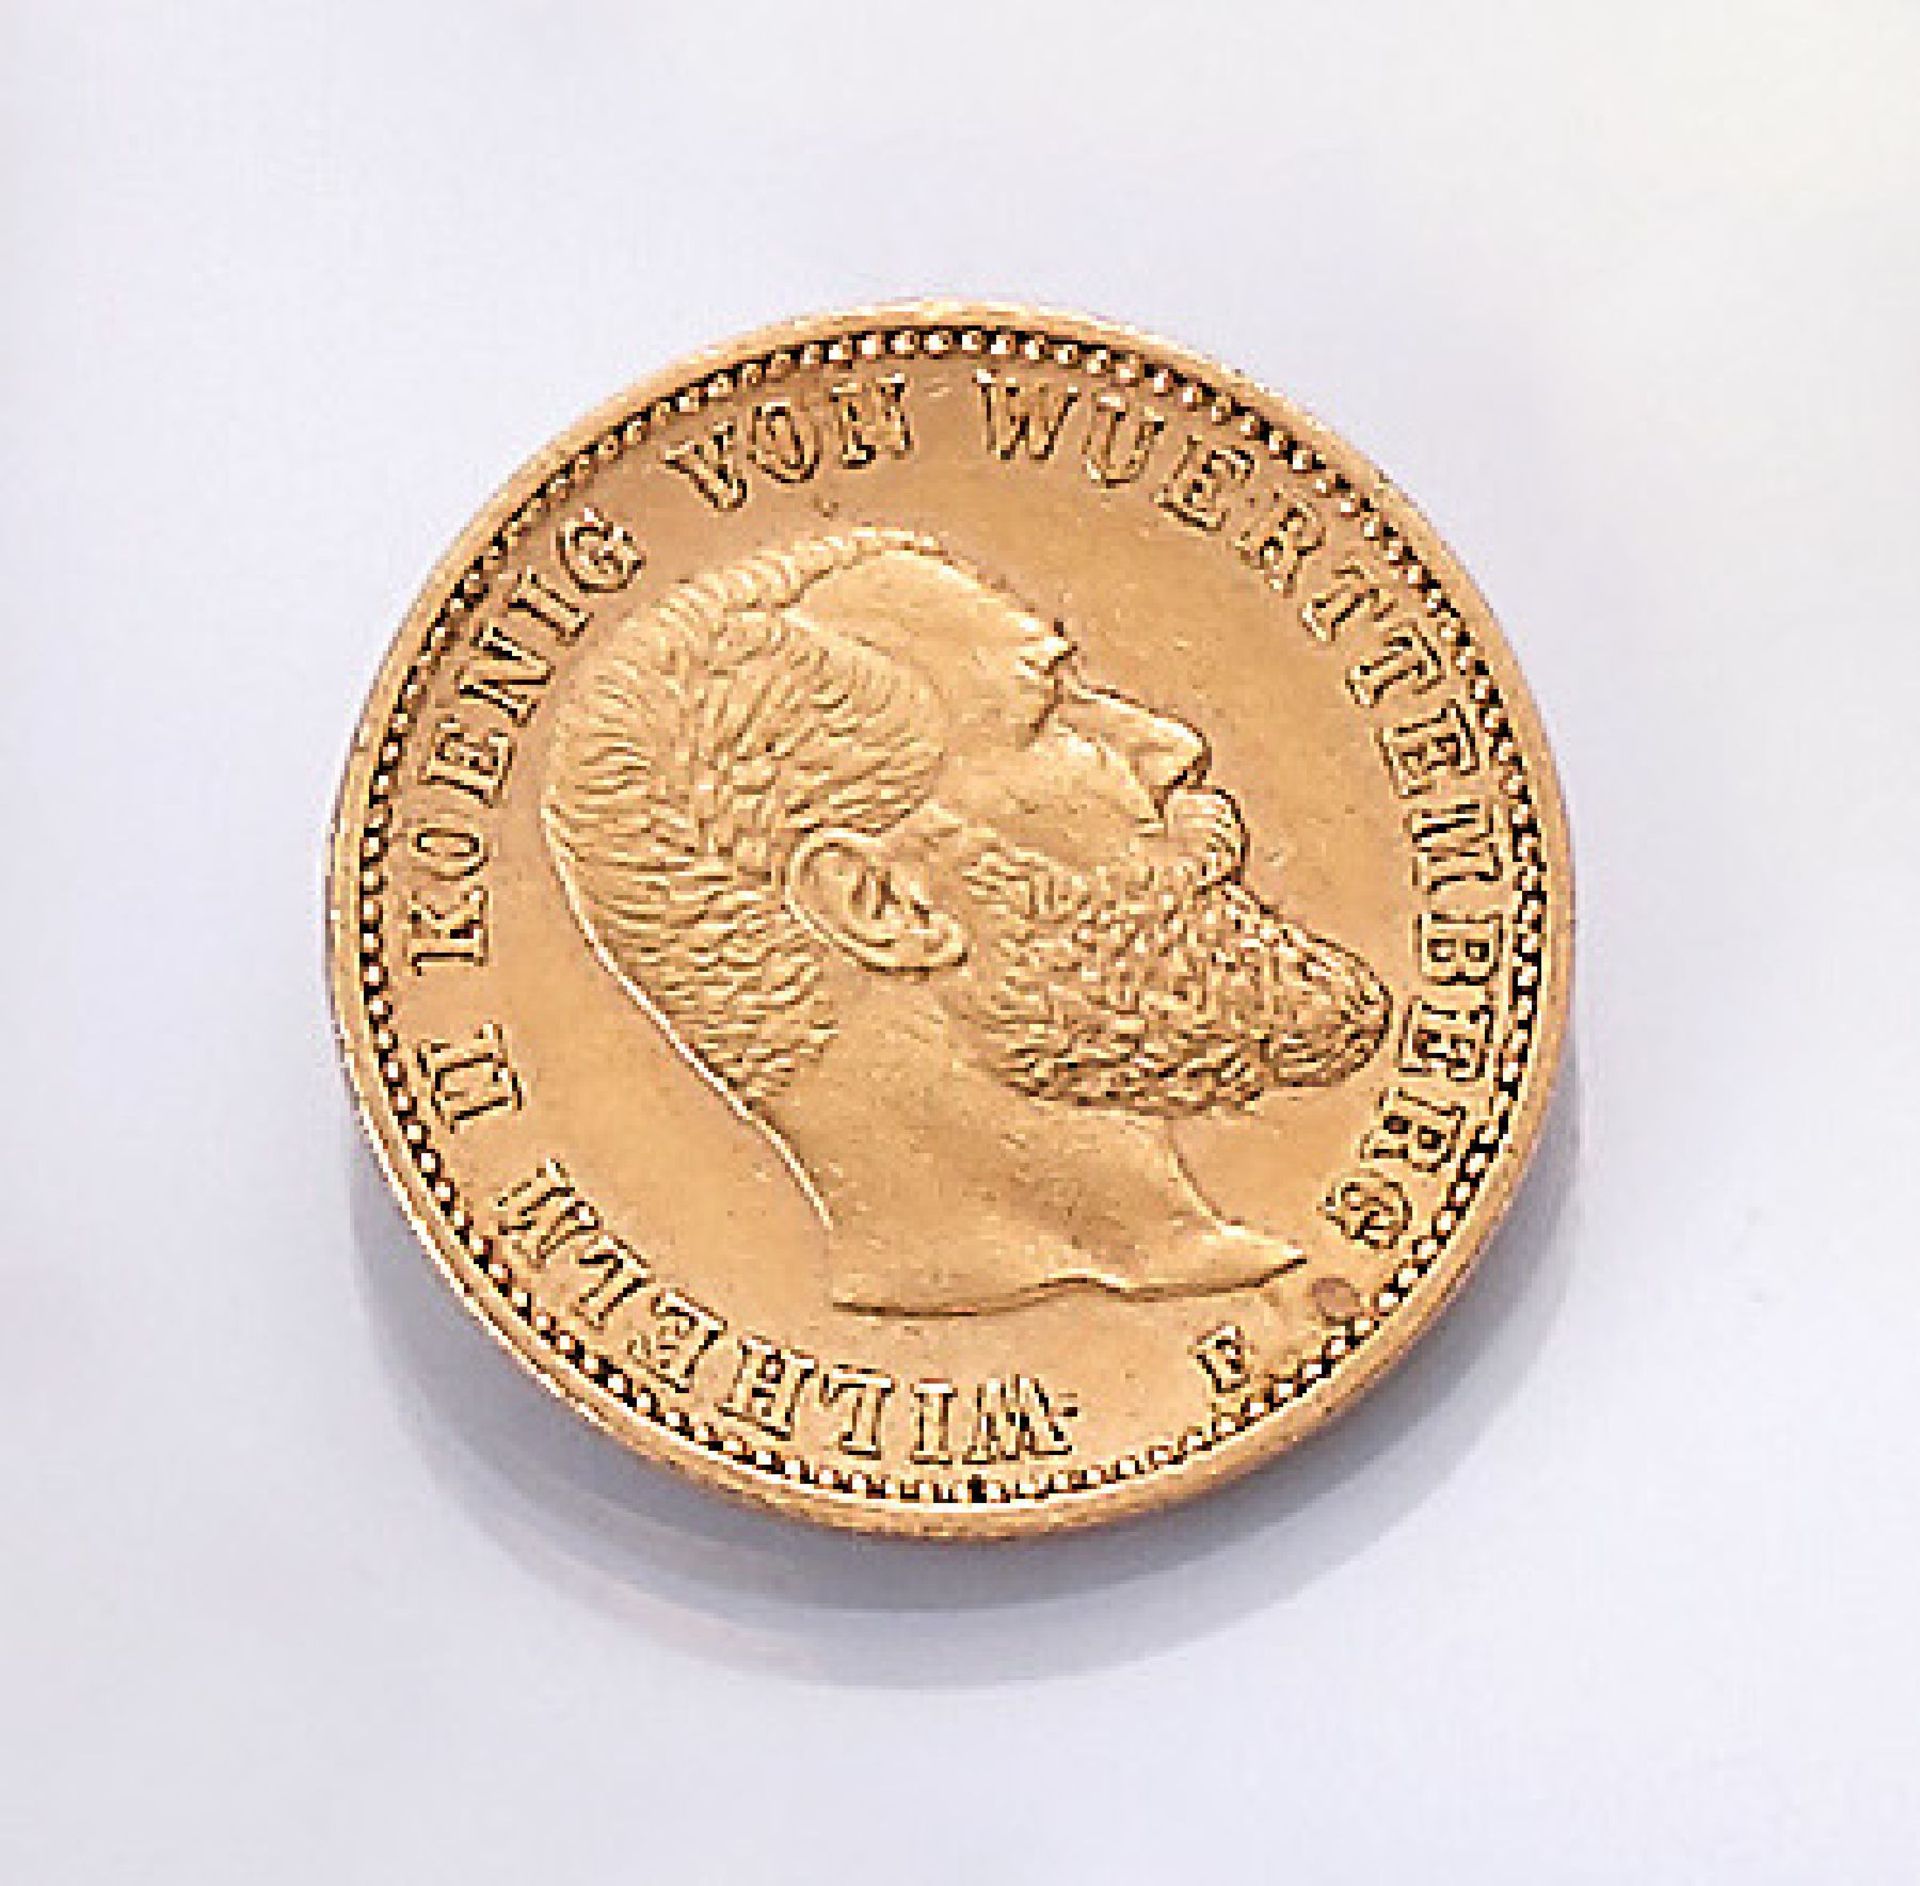 Gold coin, 20 Mark, German Reich , 1898, Wilhelm II. king of Wuerttemberg, impressed mark F